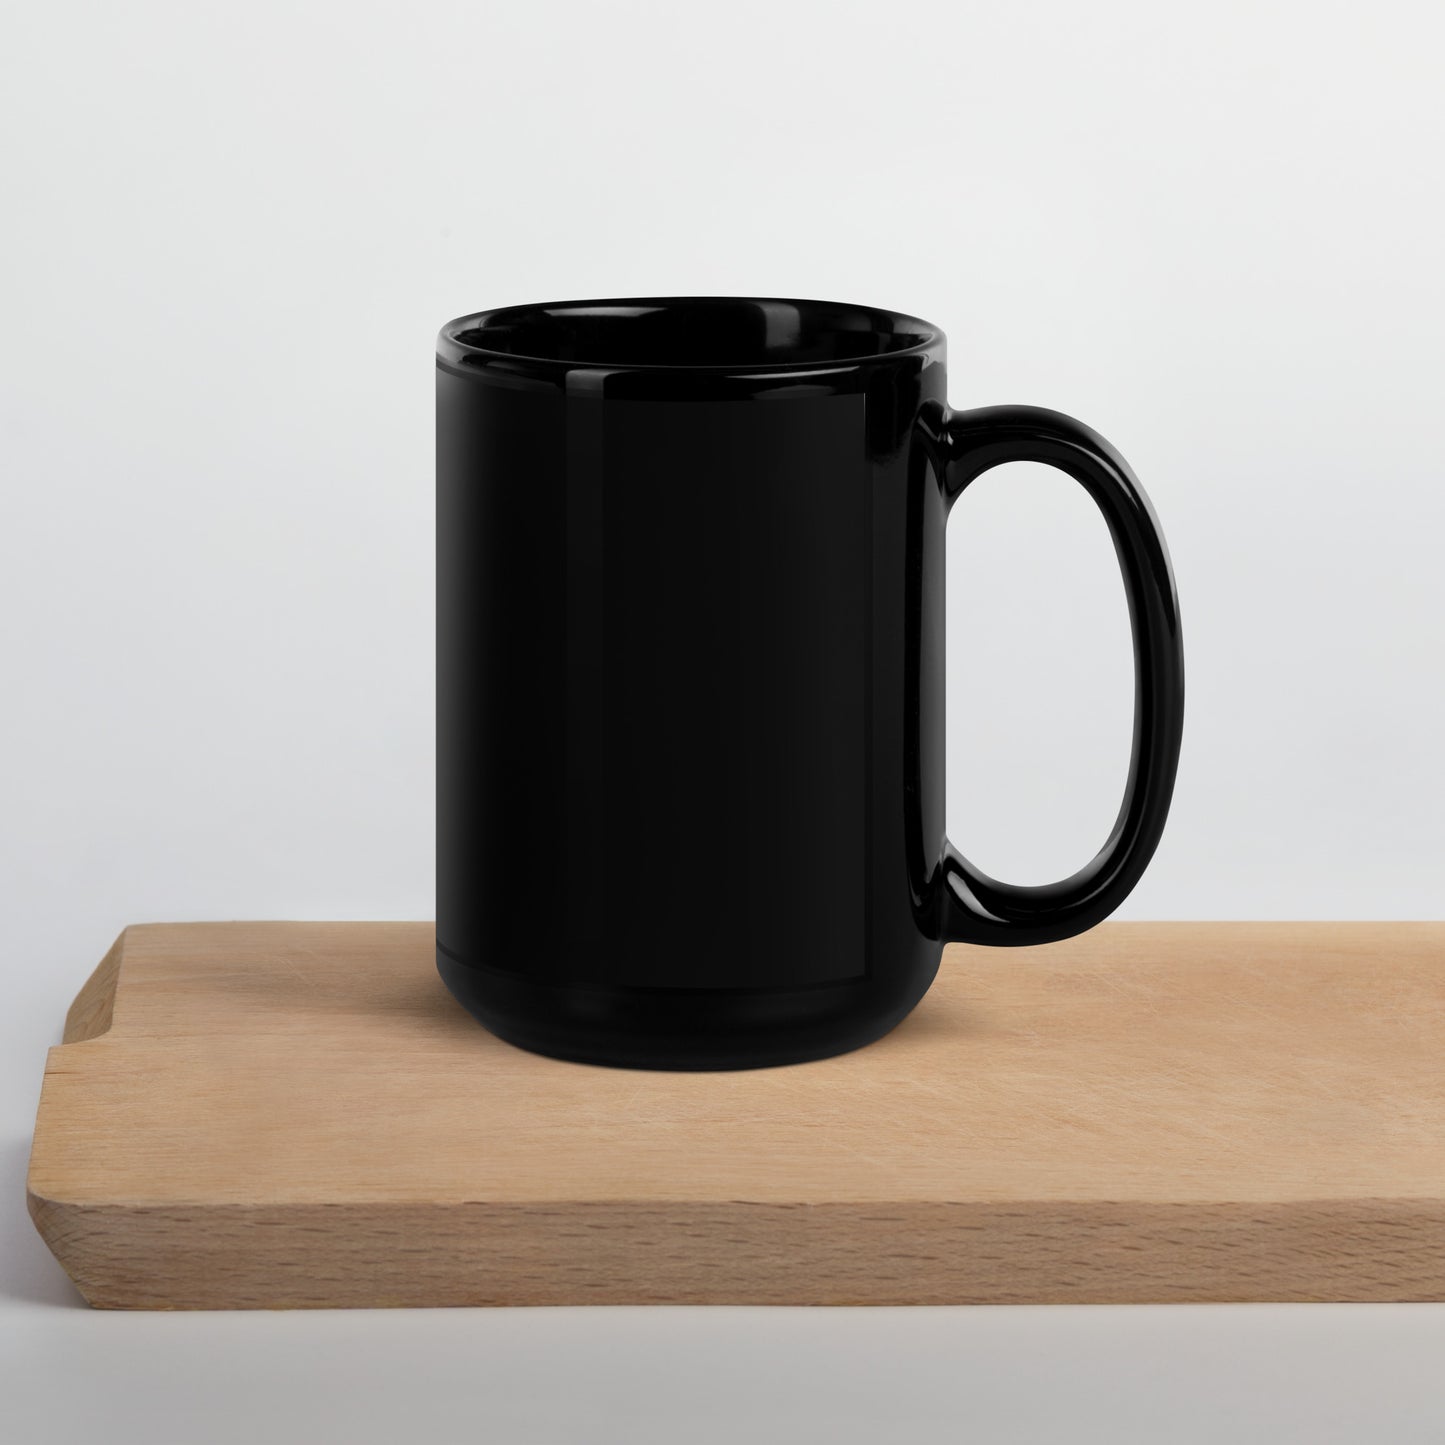 The Dark Zone black mug